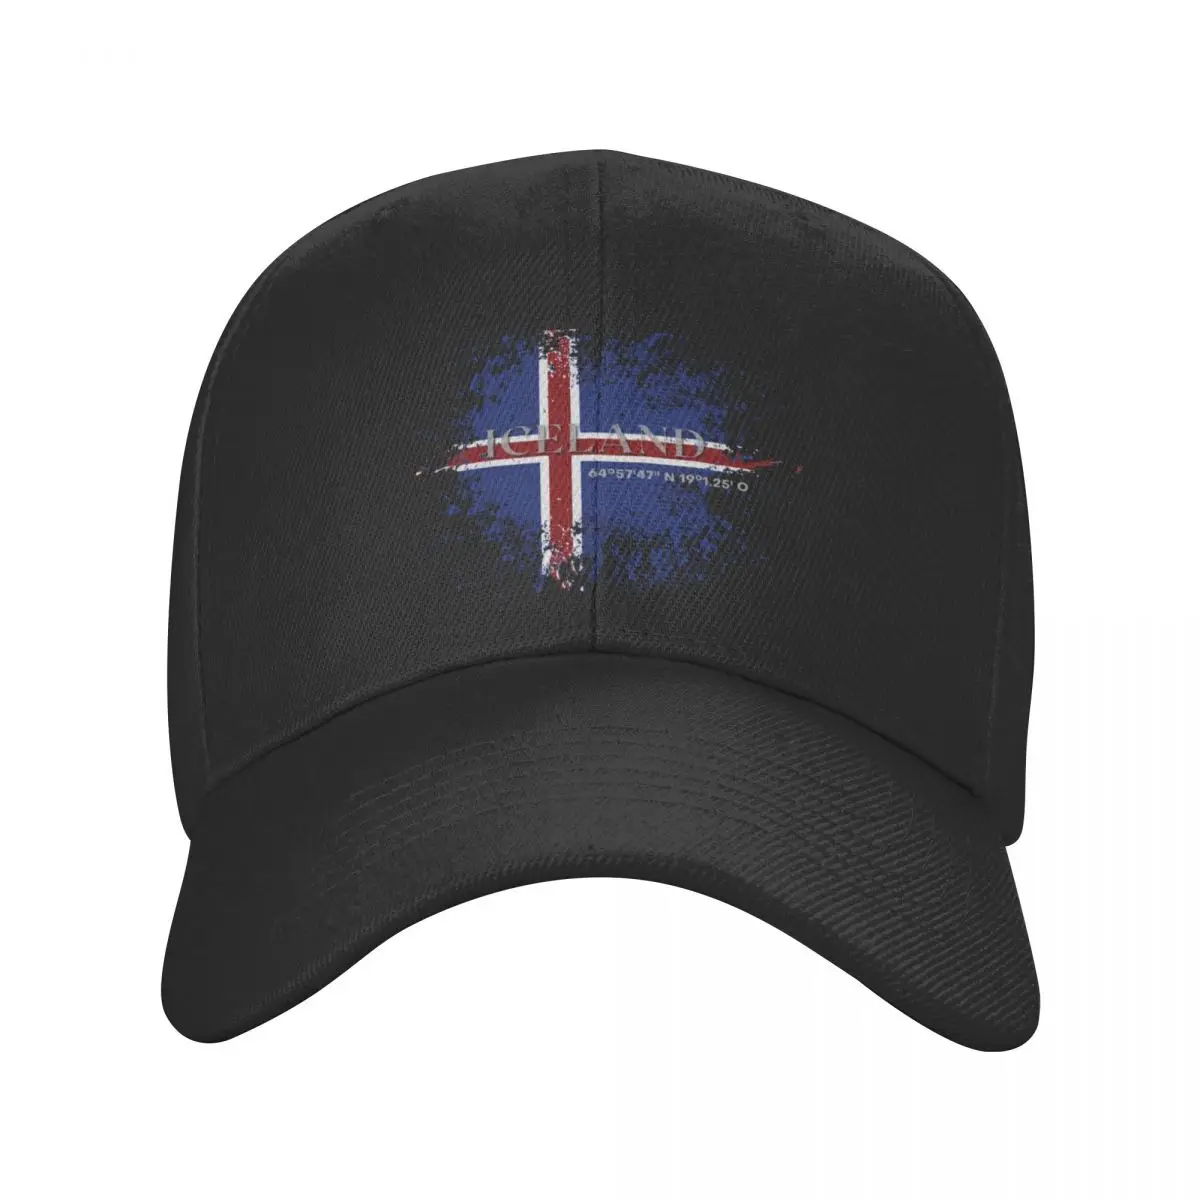 Бейсболка с флагом Исландии в стиле гранж, бейсбольная кепка, бейсбольные кепки icon, мужские кепки, женские